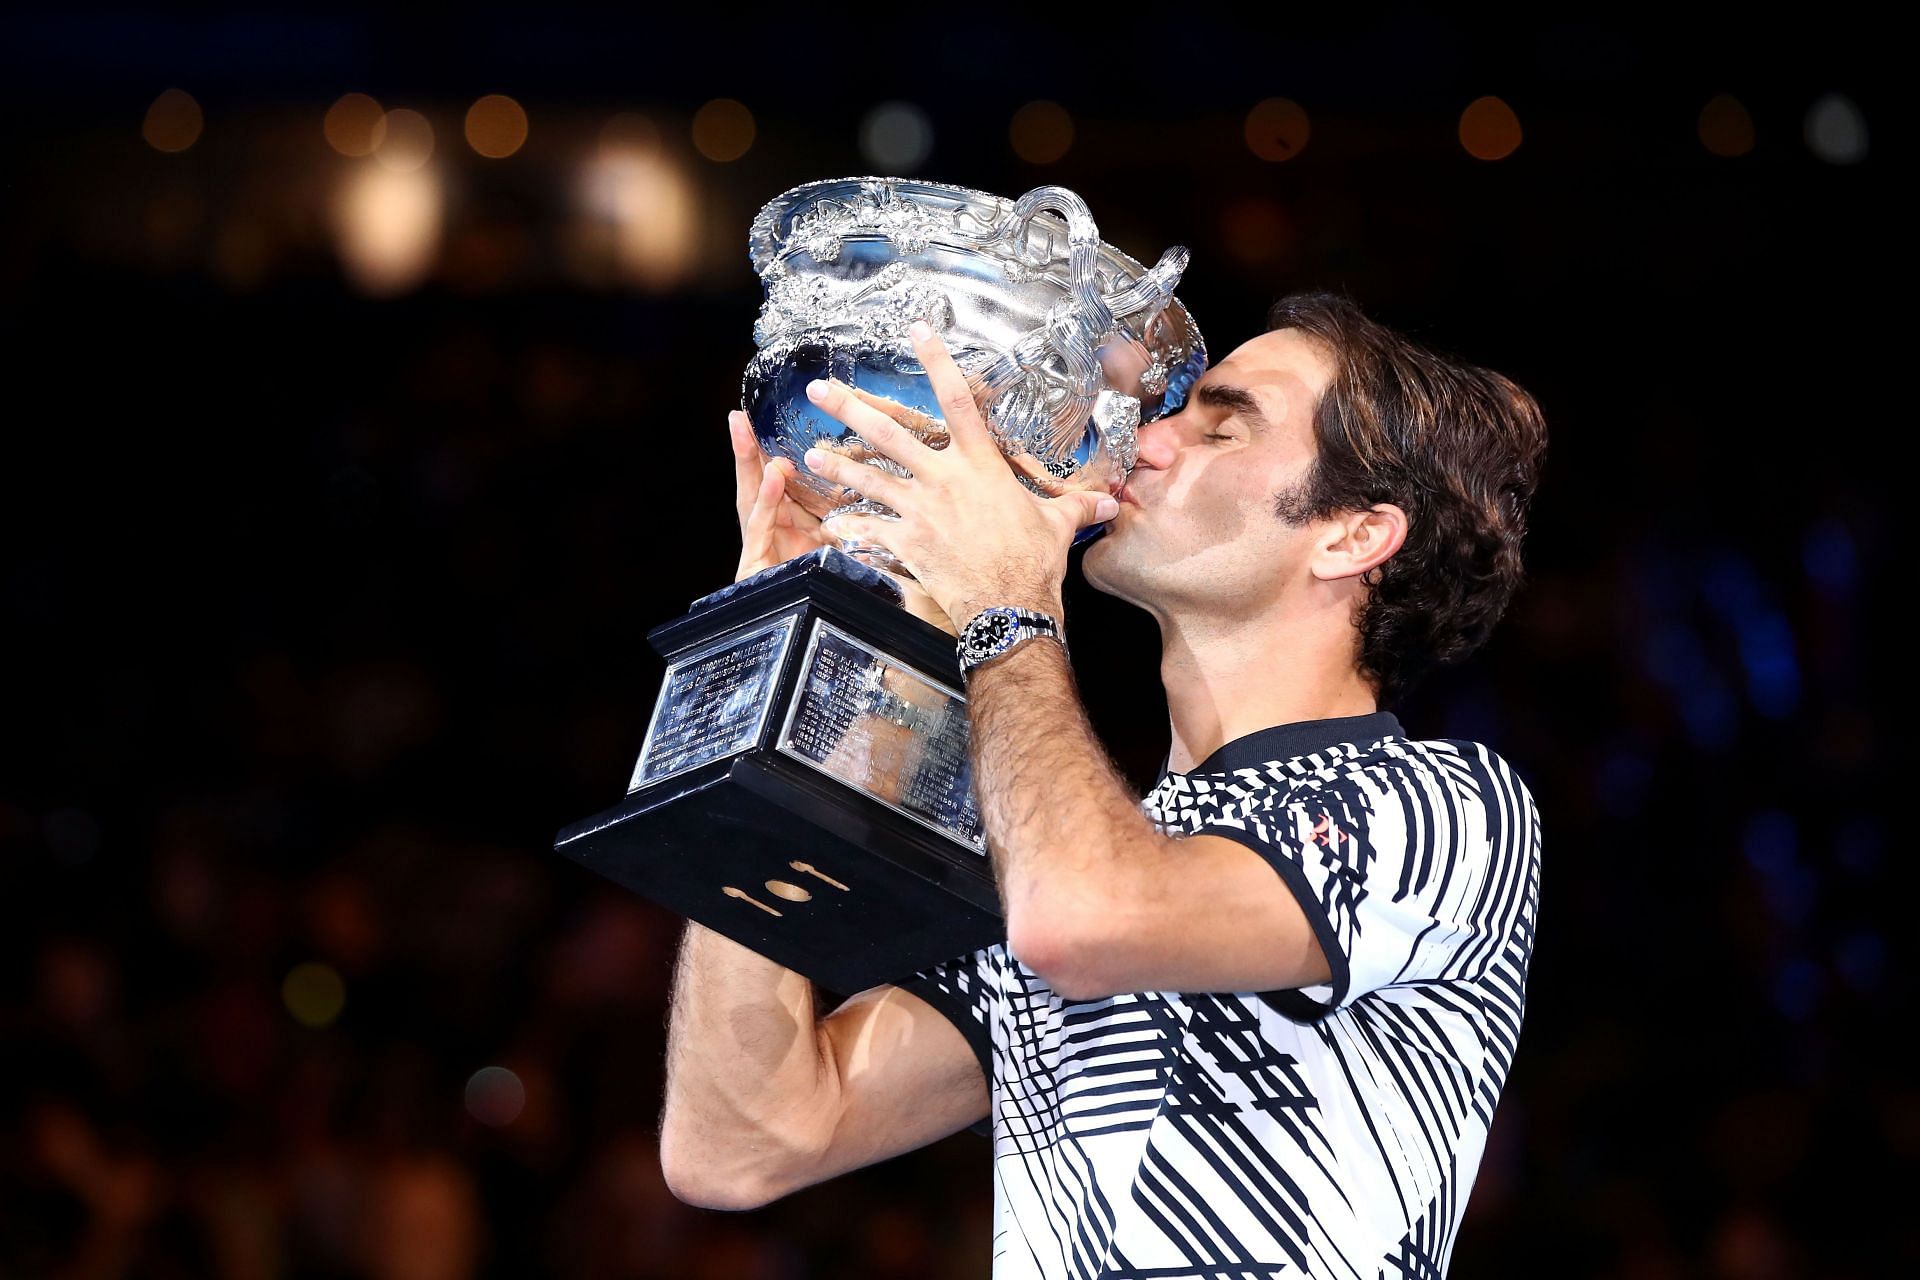 Roger Federer after winning the 2017 Australian Open